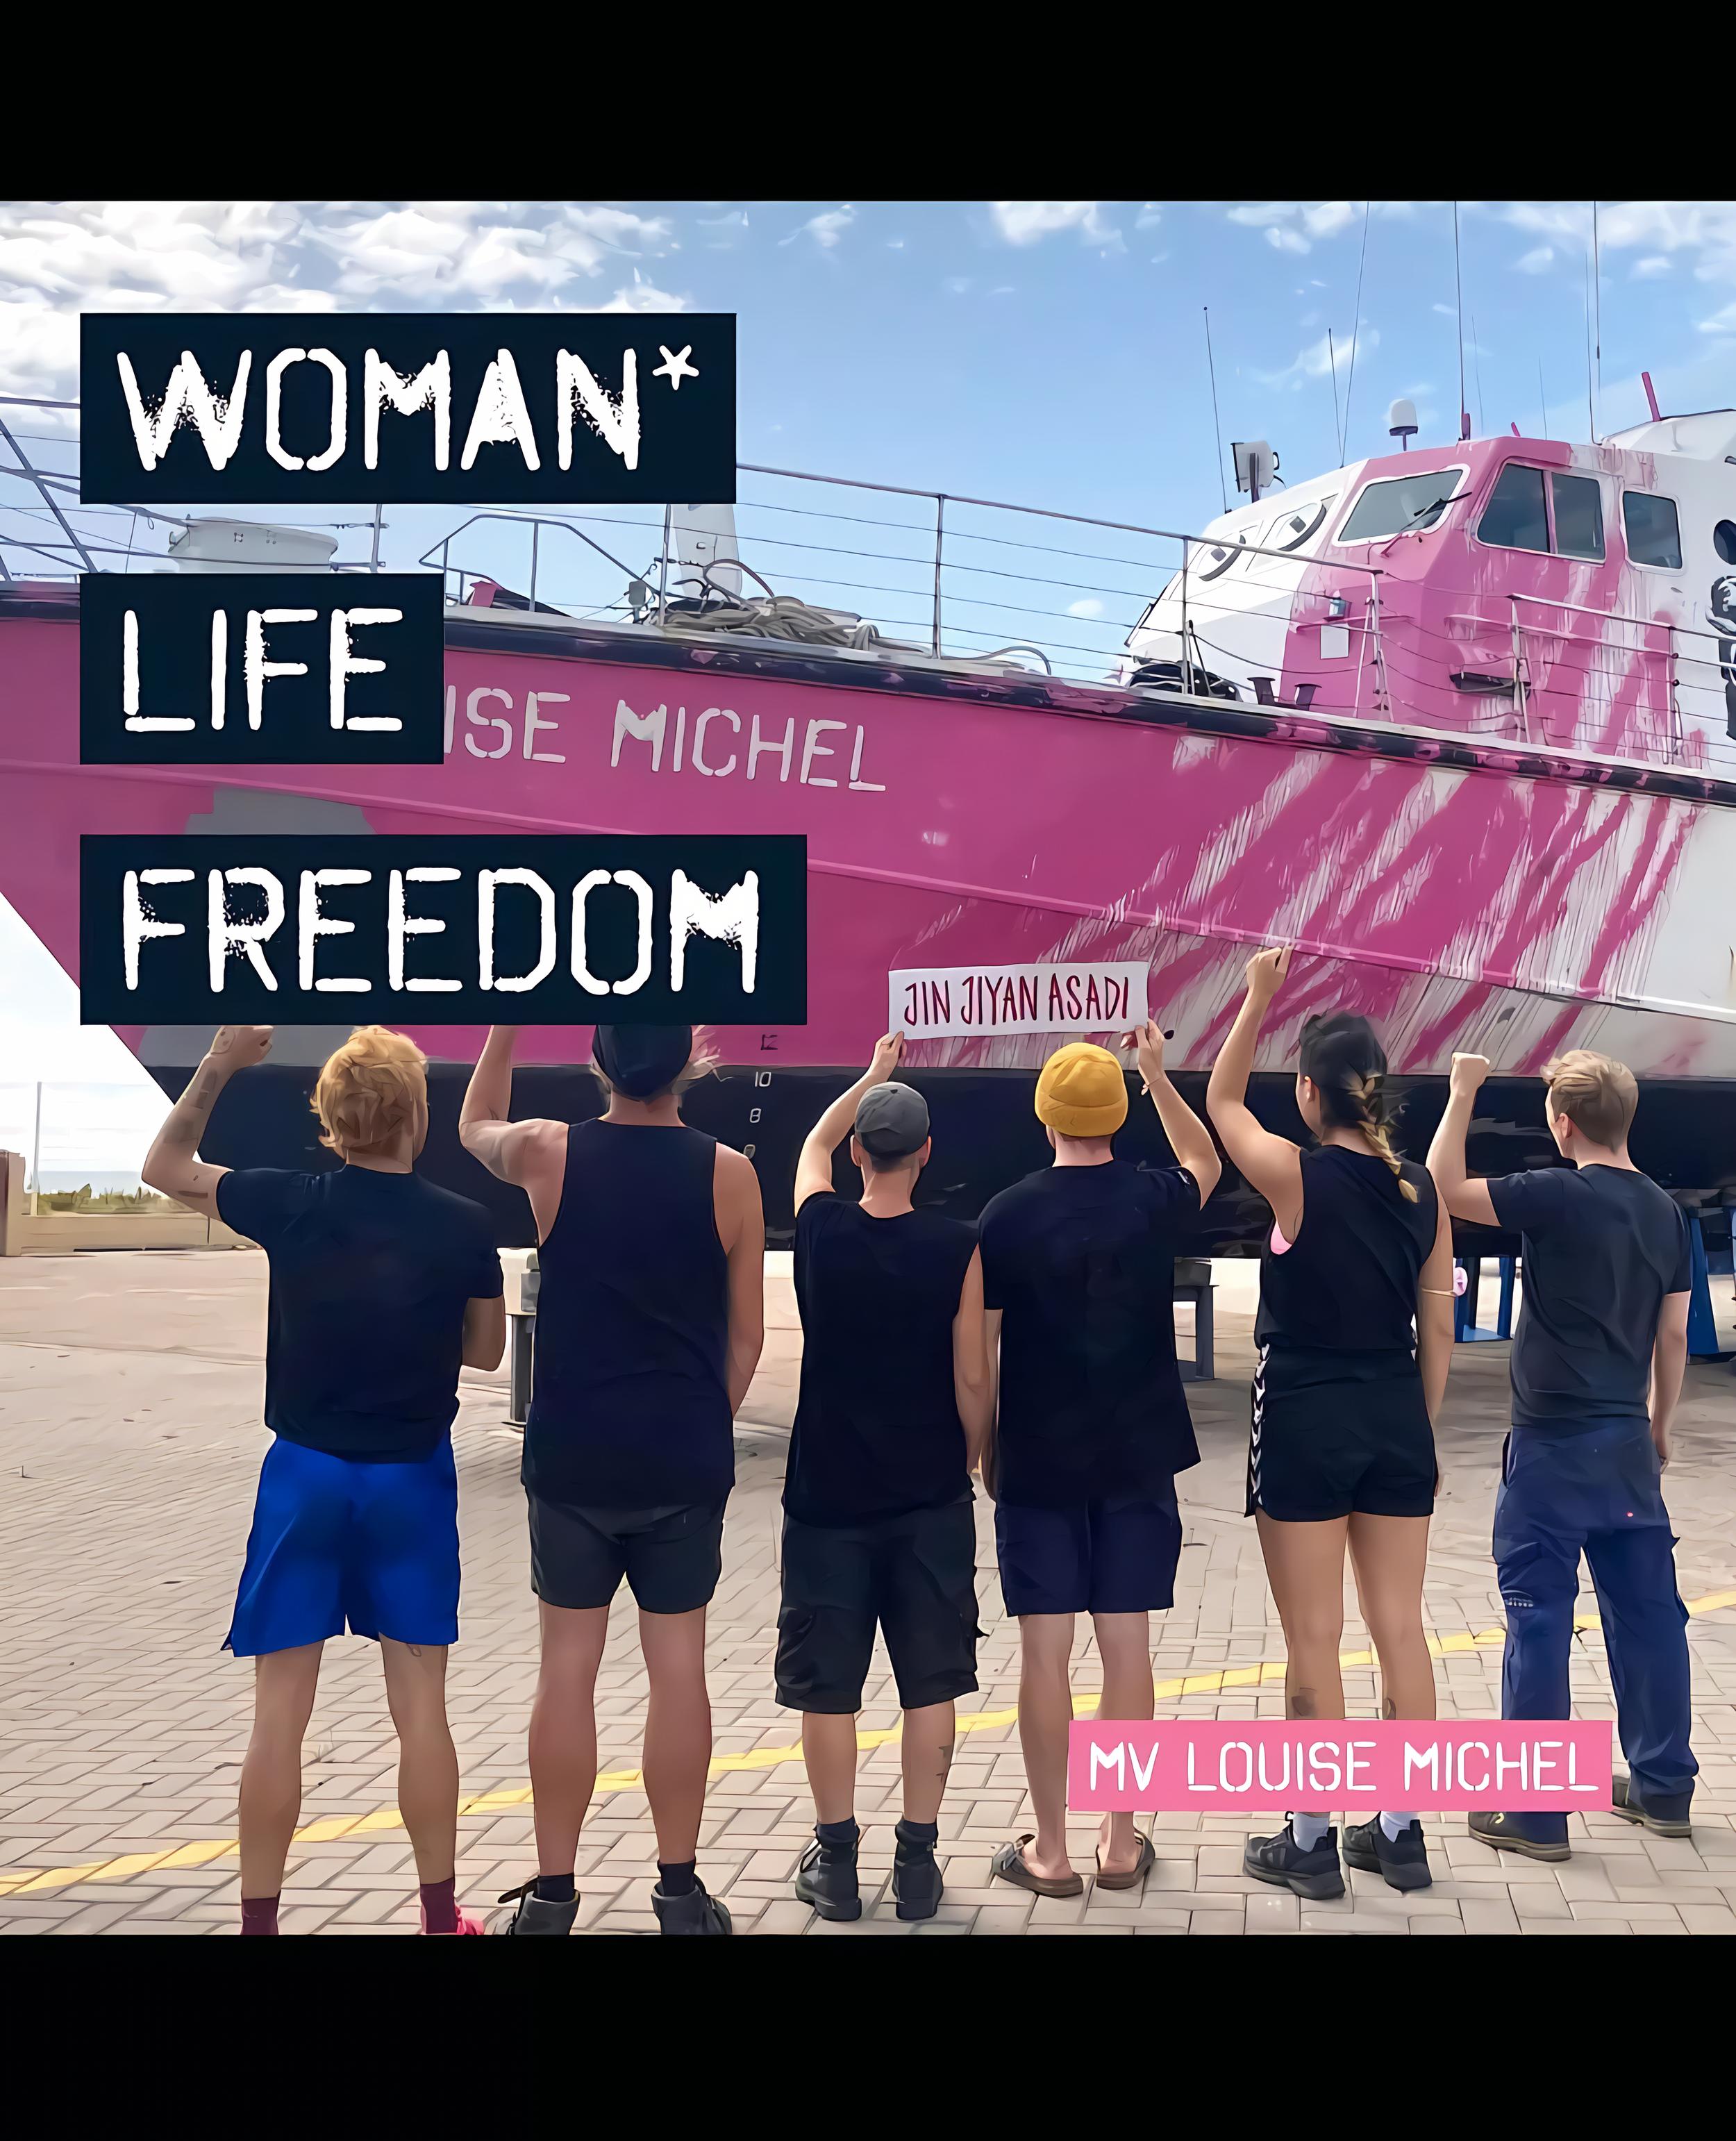 Woman, life, freedom